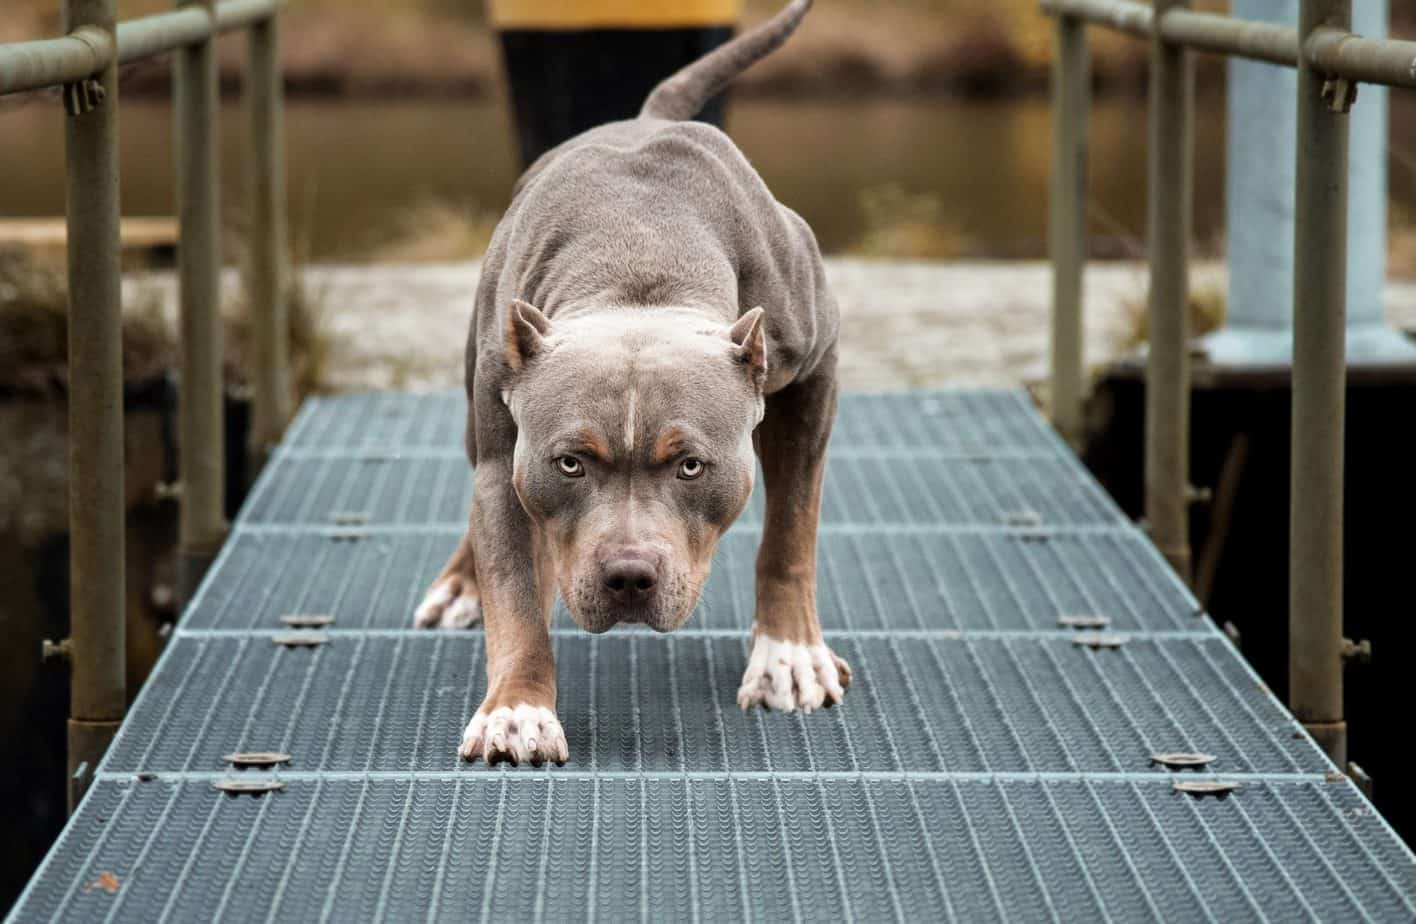 How Dangerous is the Pitbull Dog?